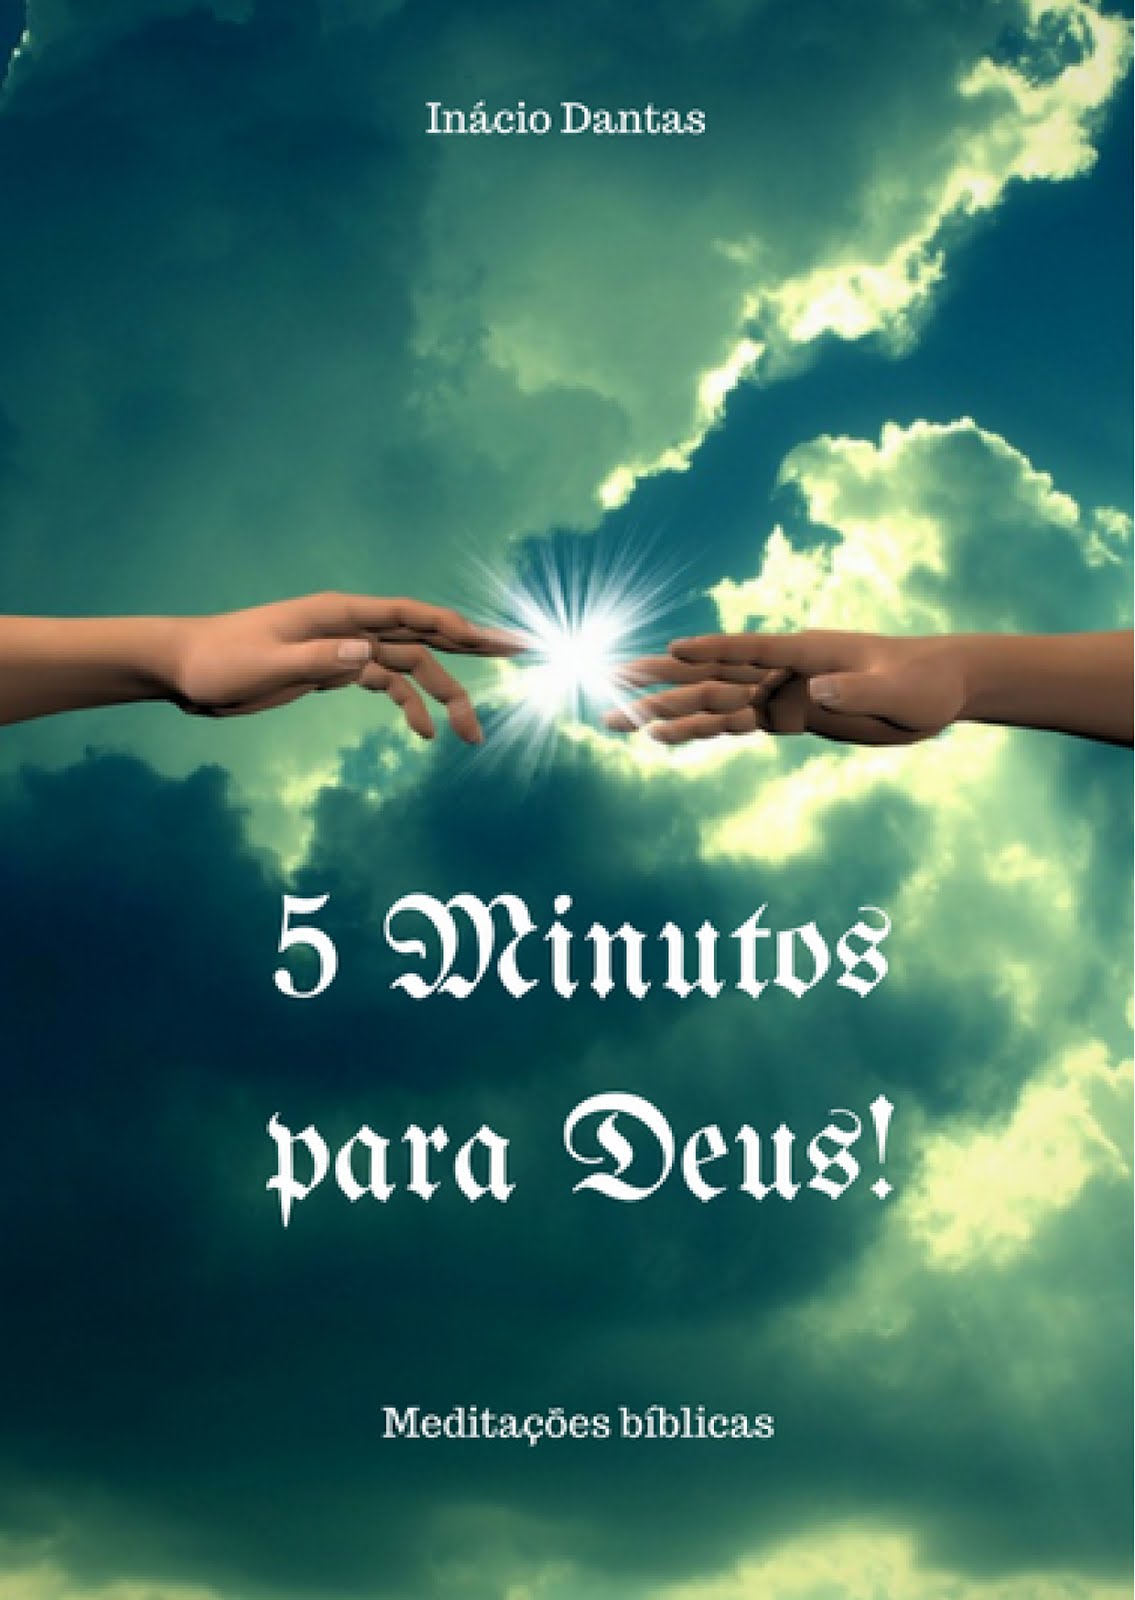 5 Minutos para Deus!